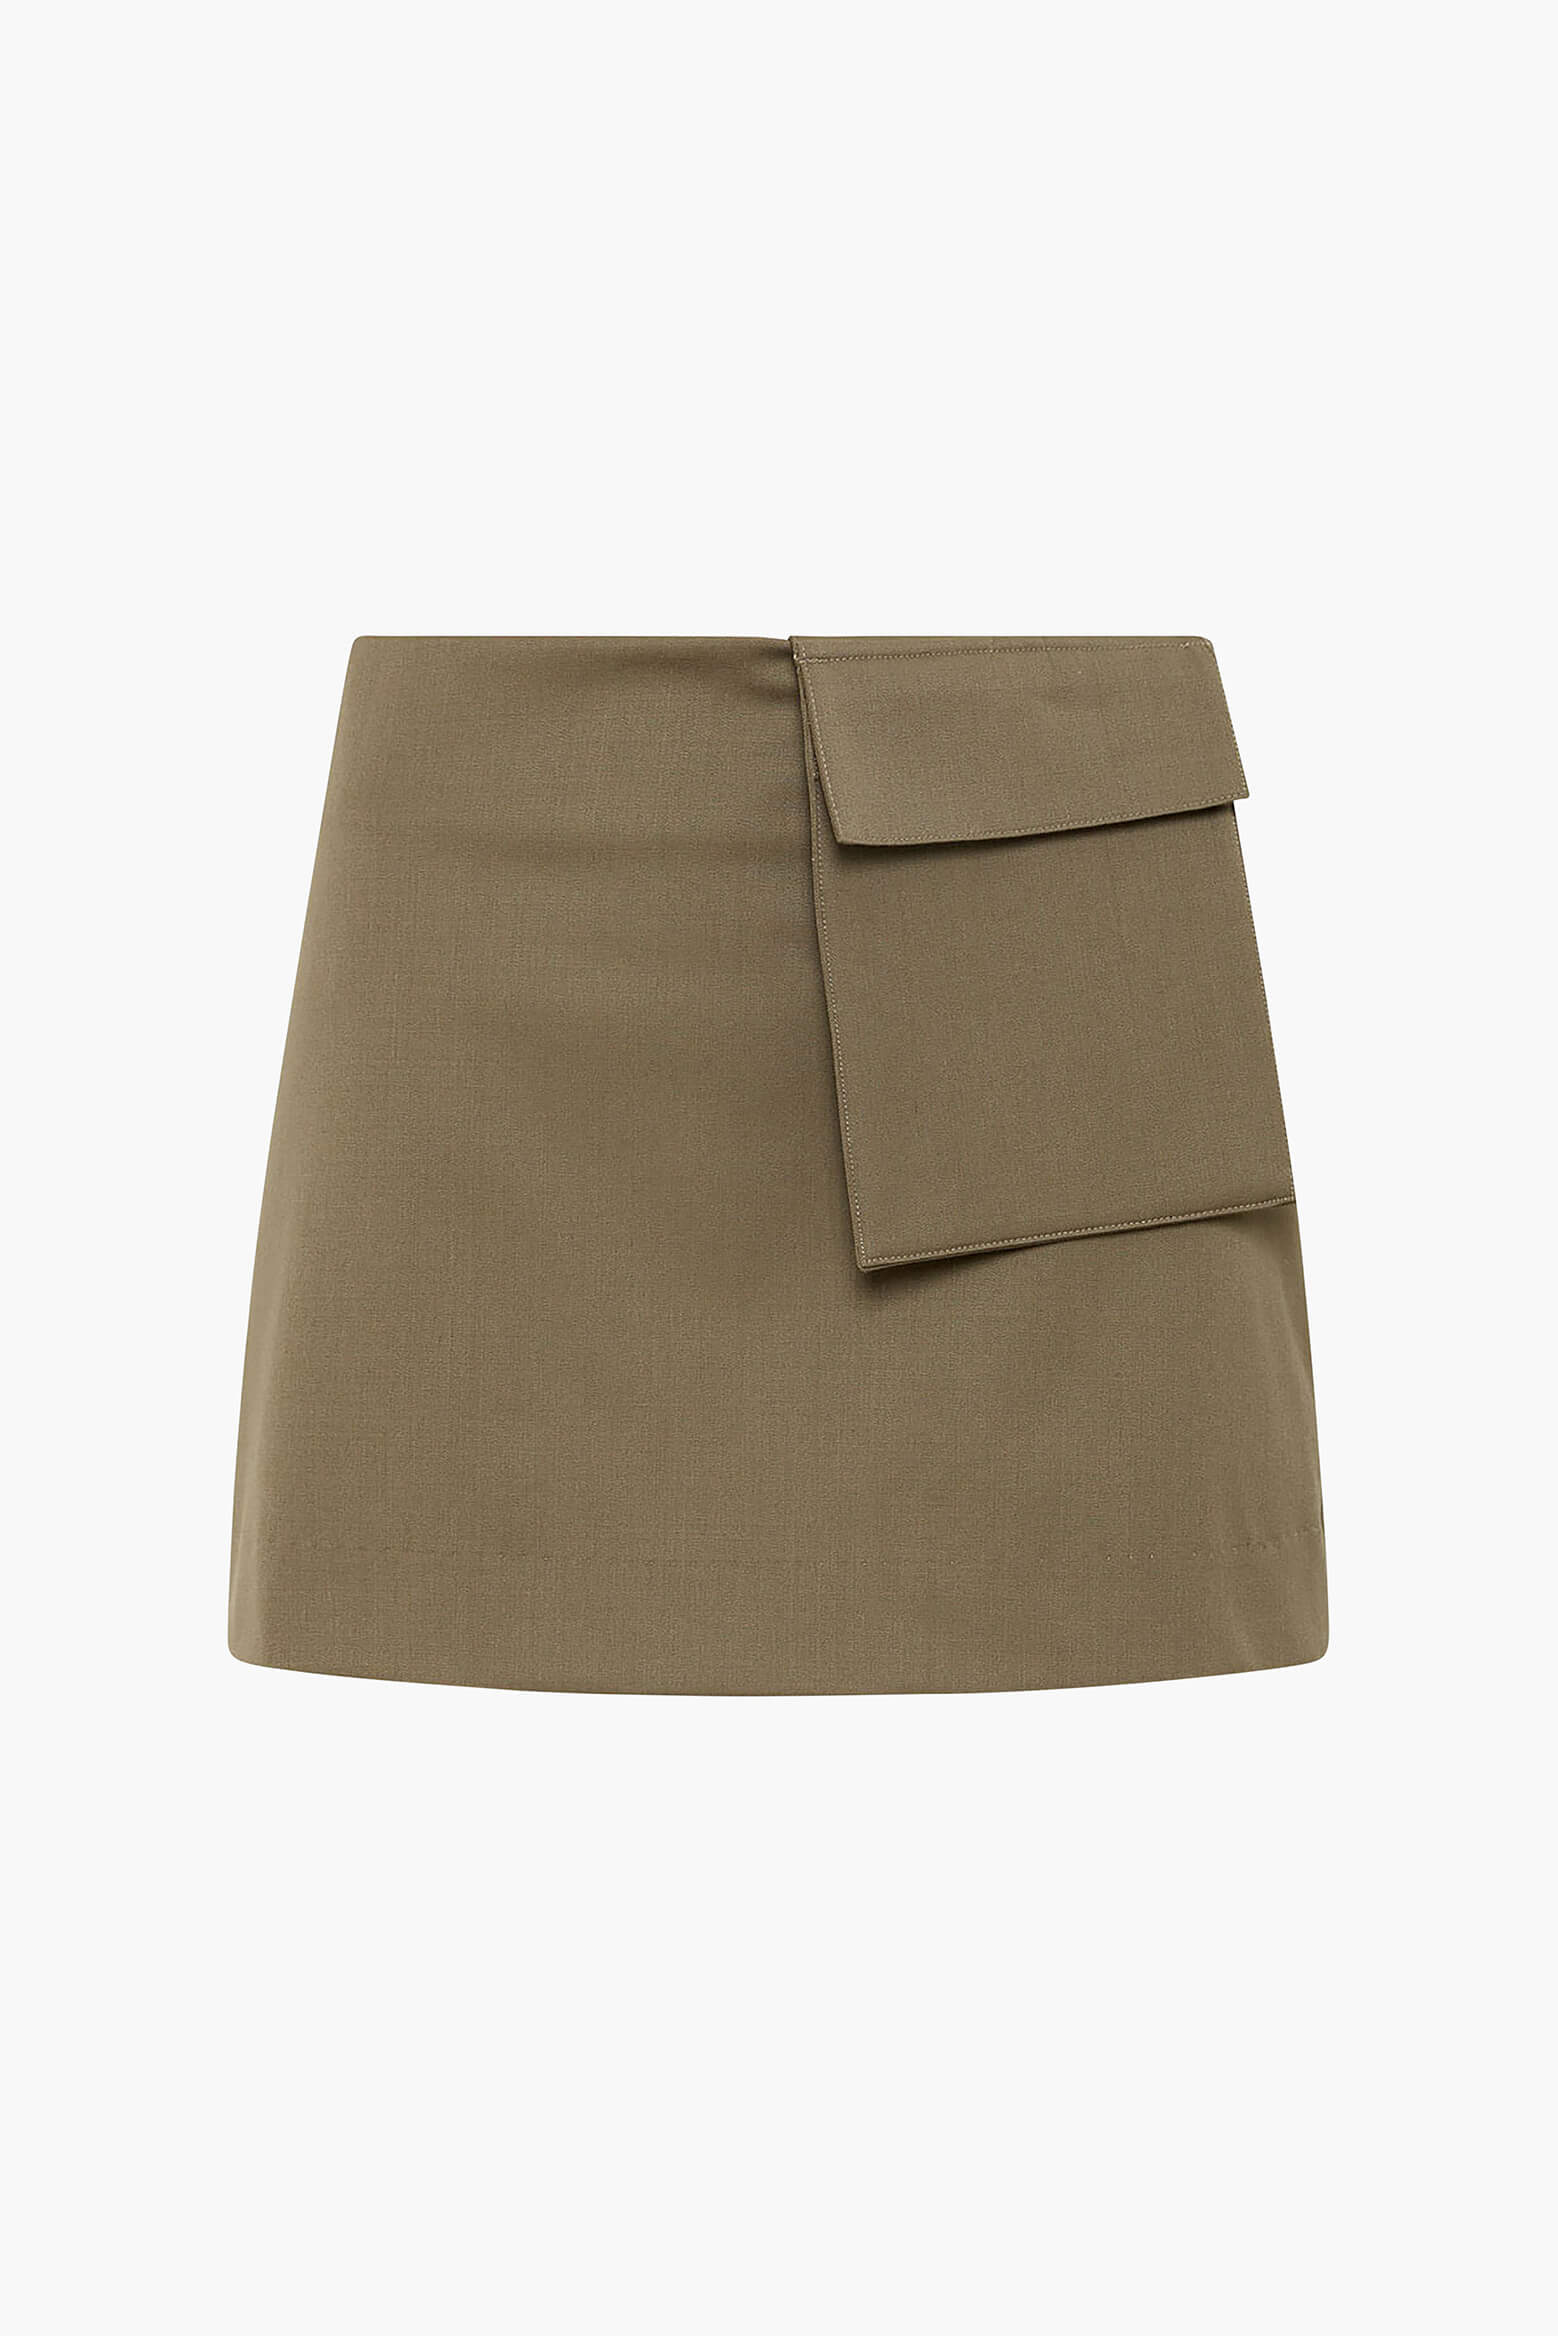 The St Agni Utilitarian Pocket Mini Skirt in Kelp available at The New Trend Australia